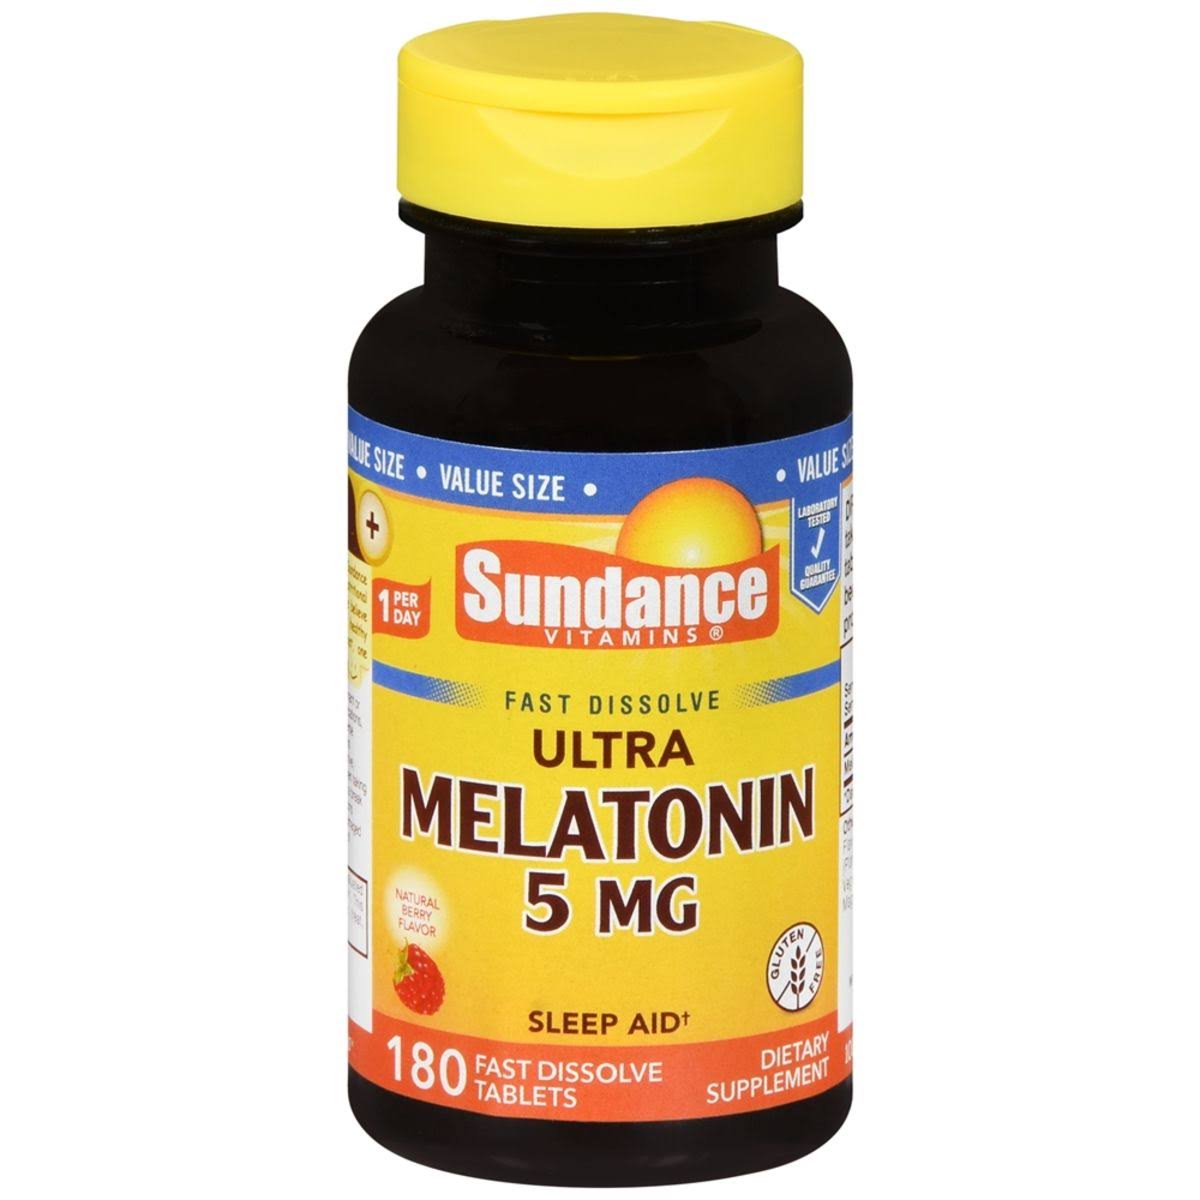 Sundance Ultra Melatonin Dietary Supplement Tablets - 5mg, 180ct